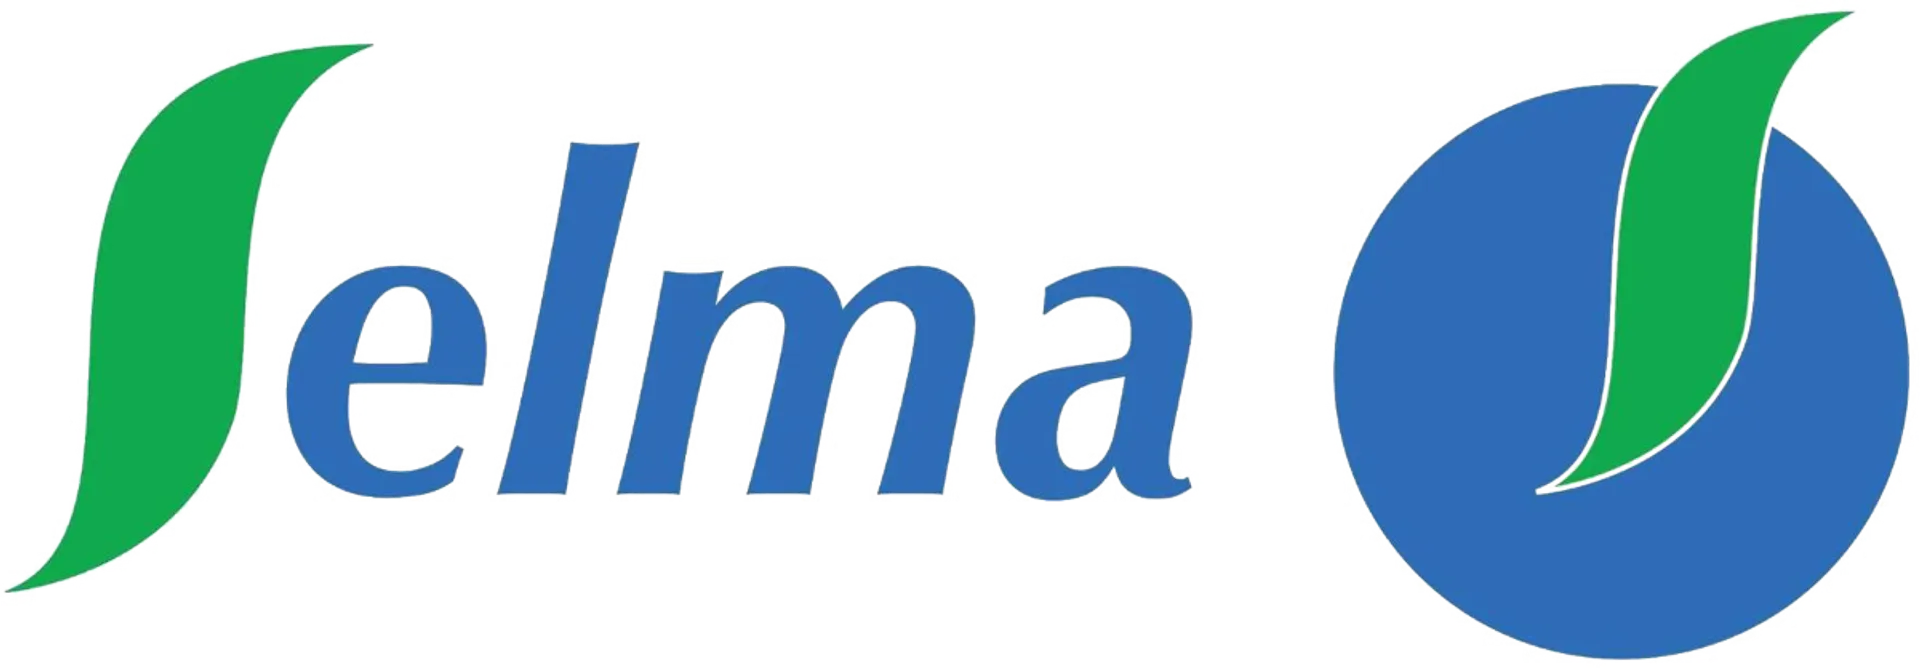 FARMACIA SELMA logo